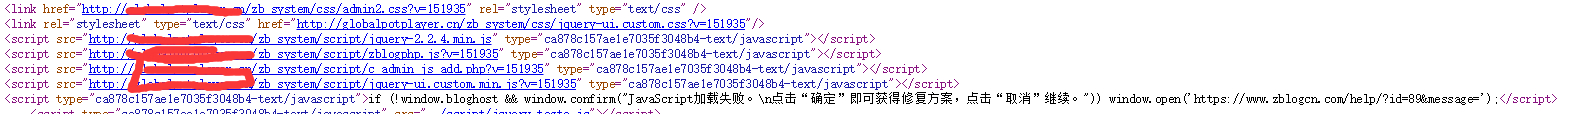 Zblog后台源码显示JavaScript加载失败解决办法